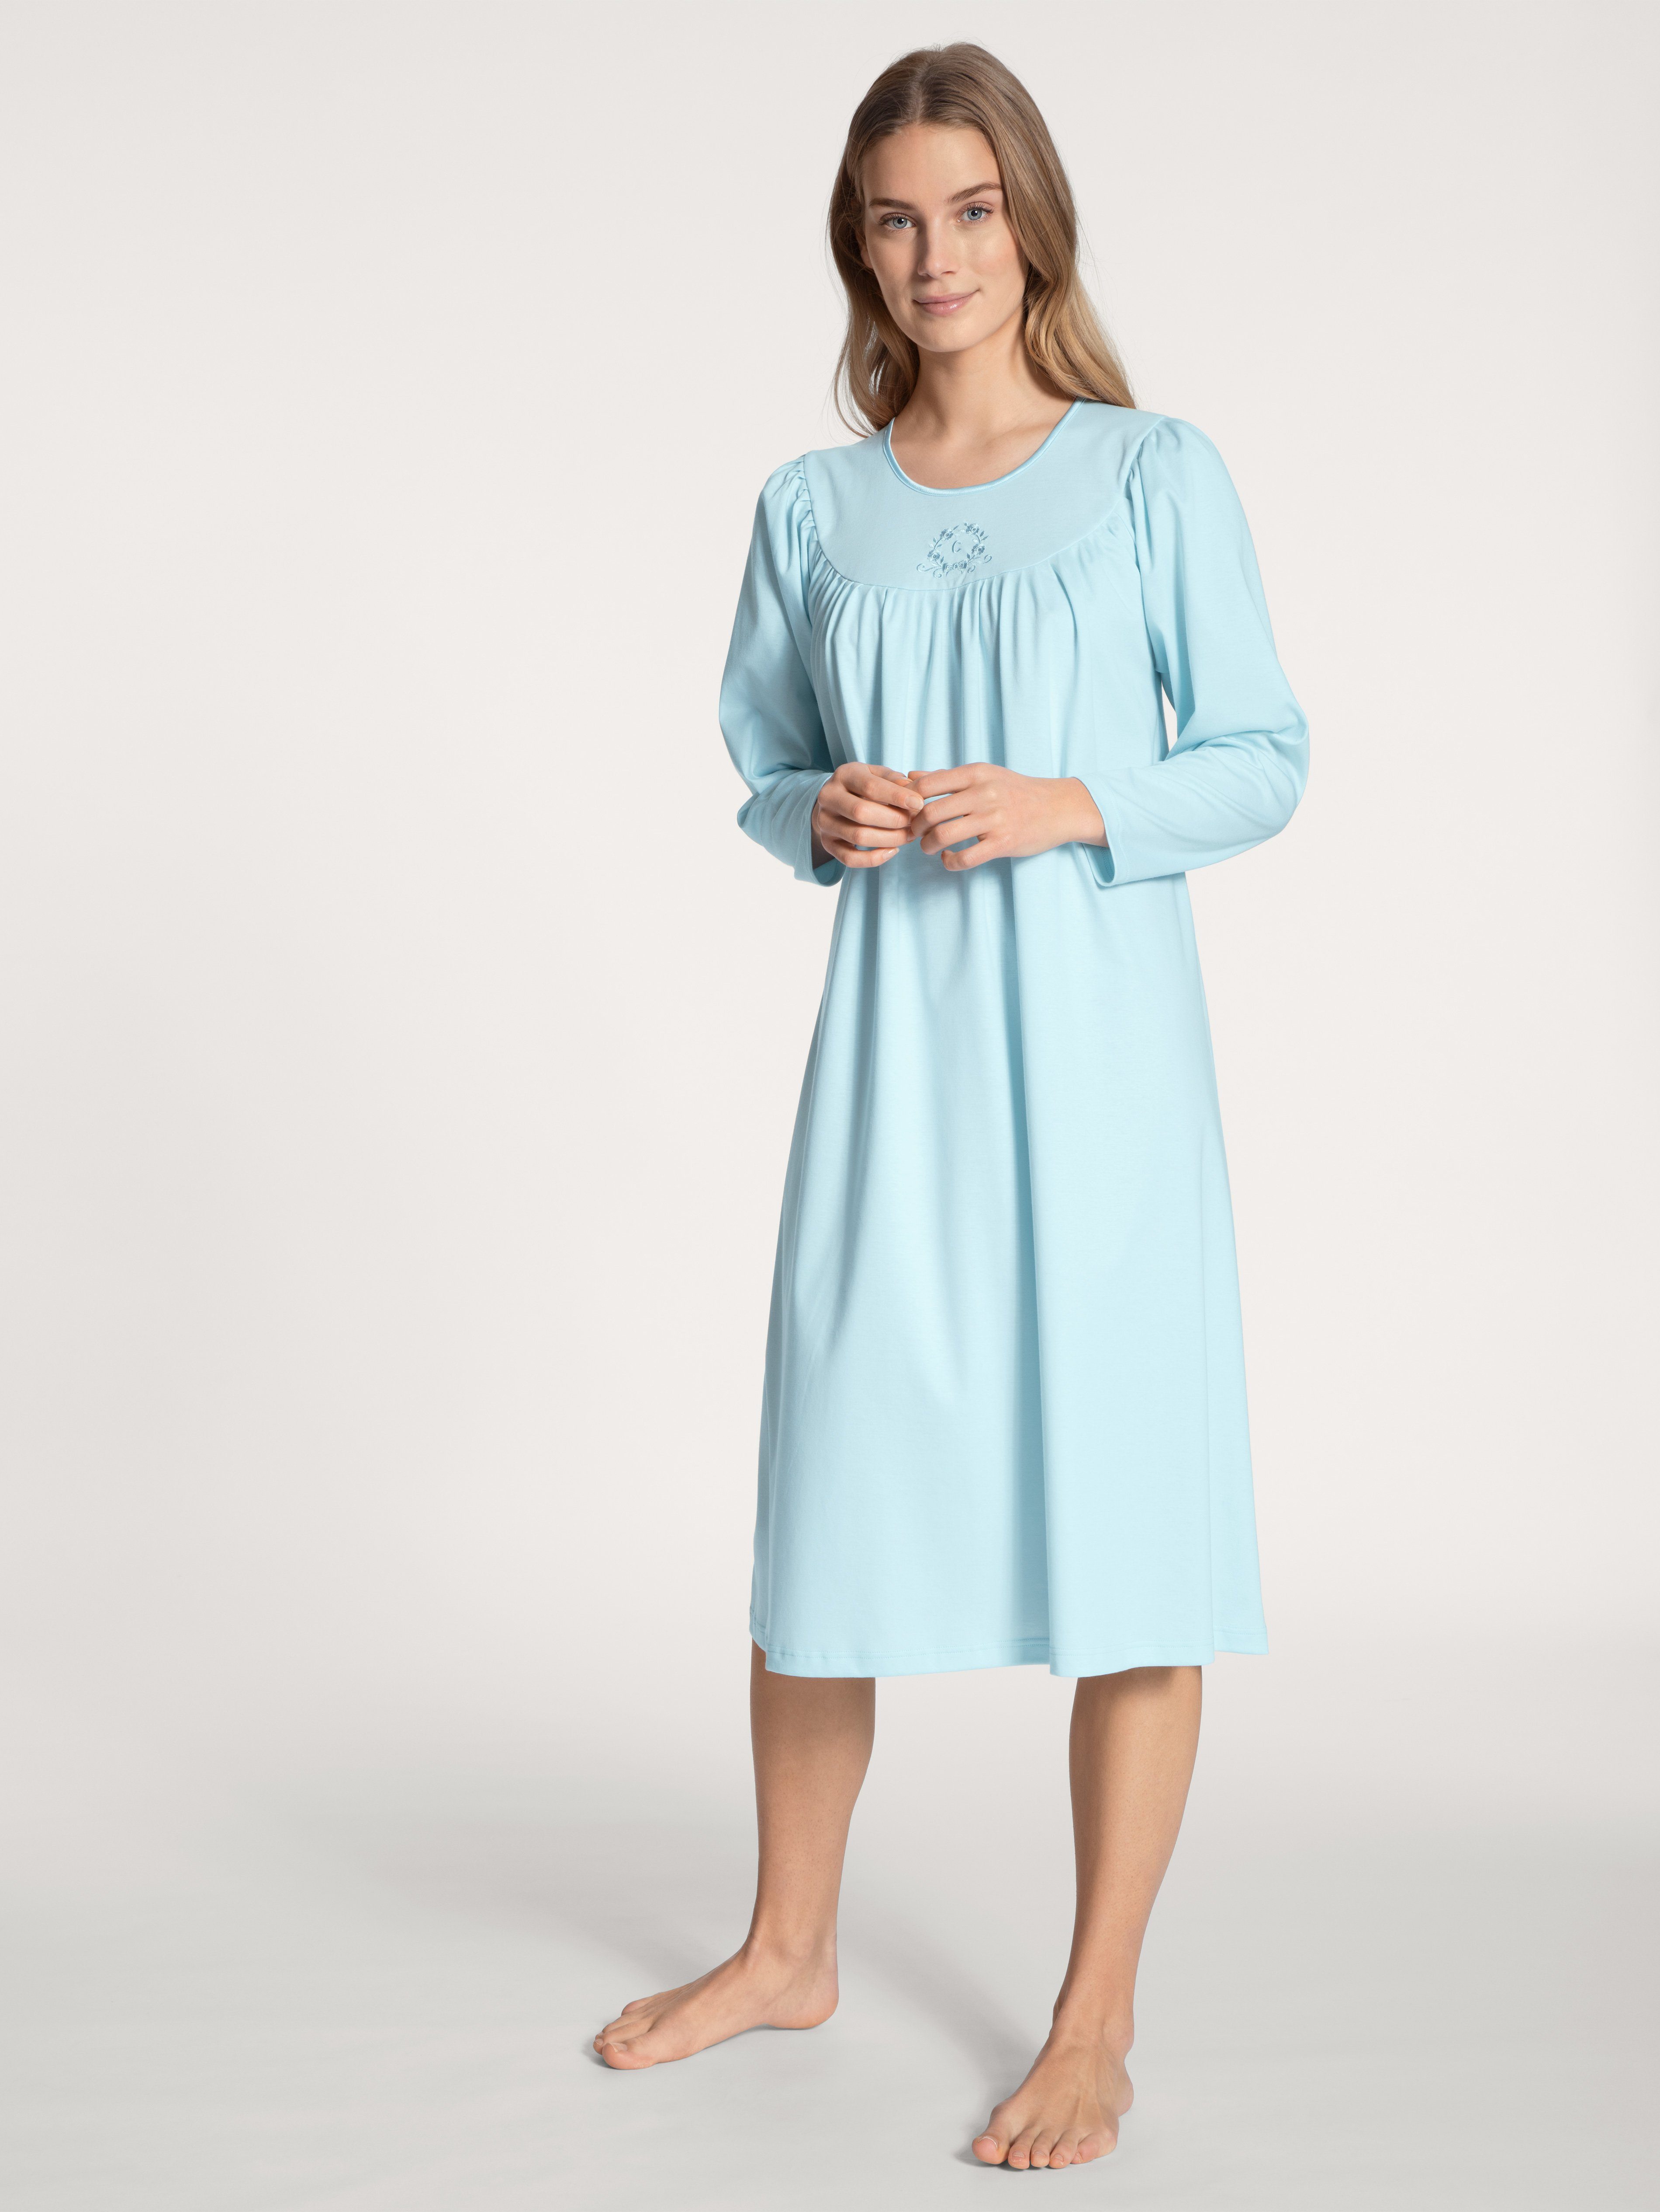 Fit, Nachthemd Soft ca. cm 110 hellblau CALIDA Cotton Raglanschnitt Schlafhemd lang, Comfort